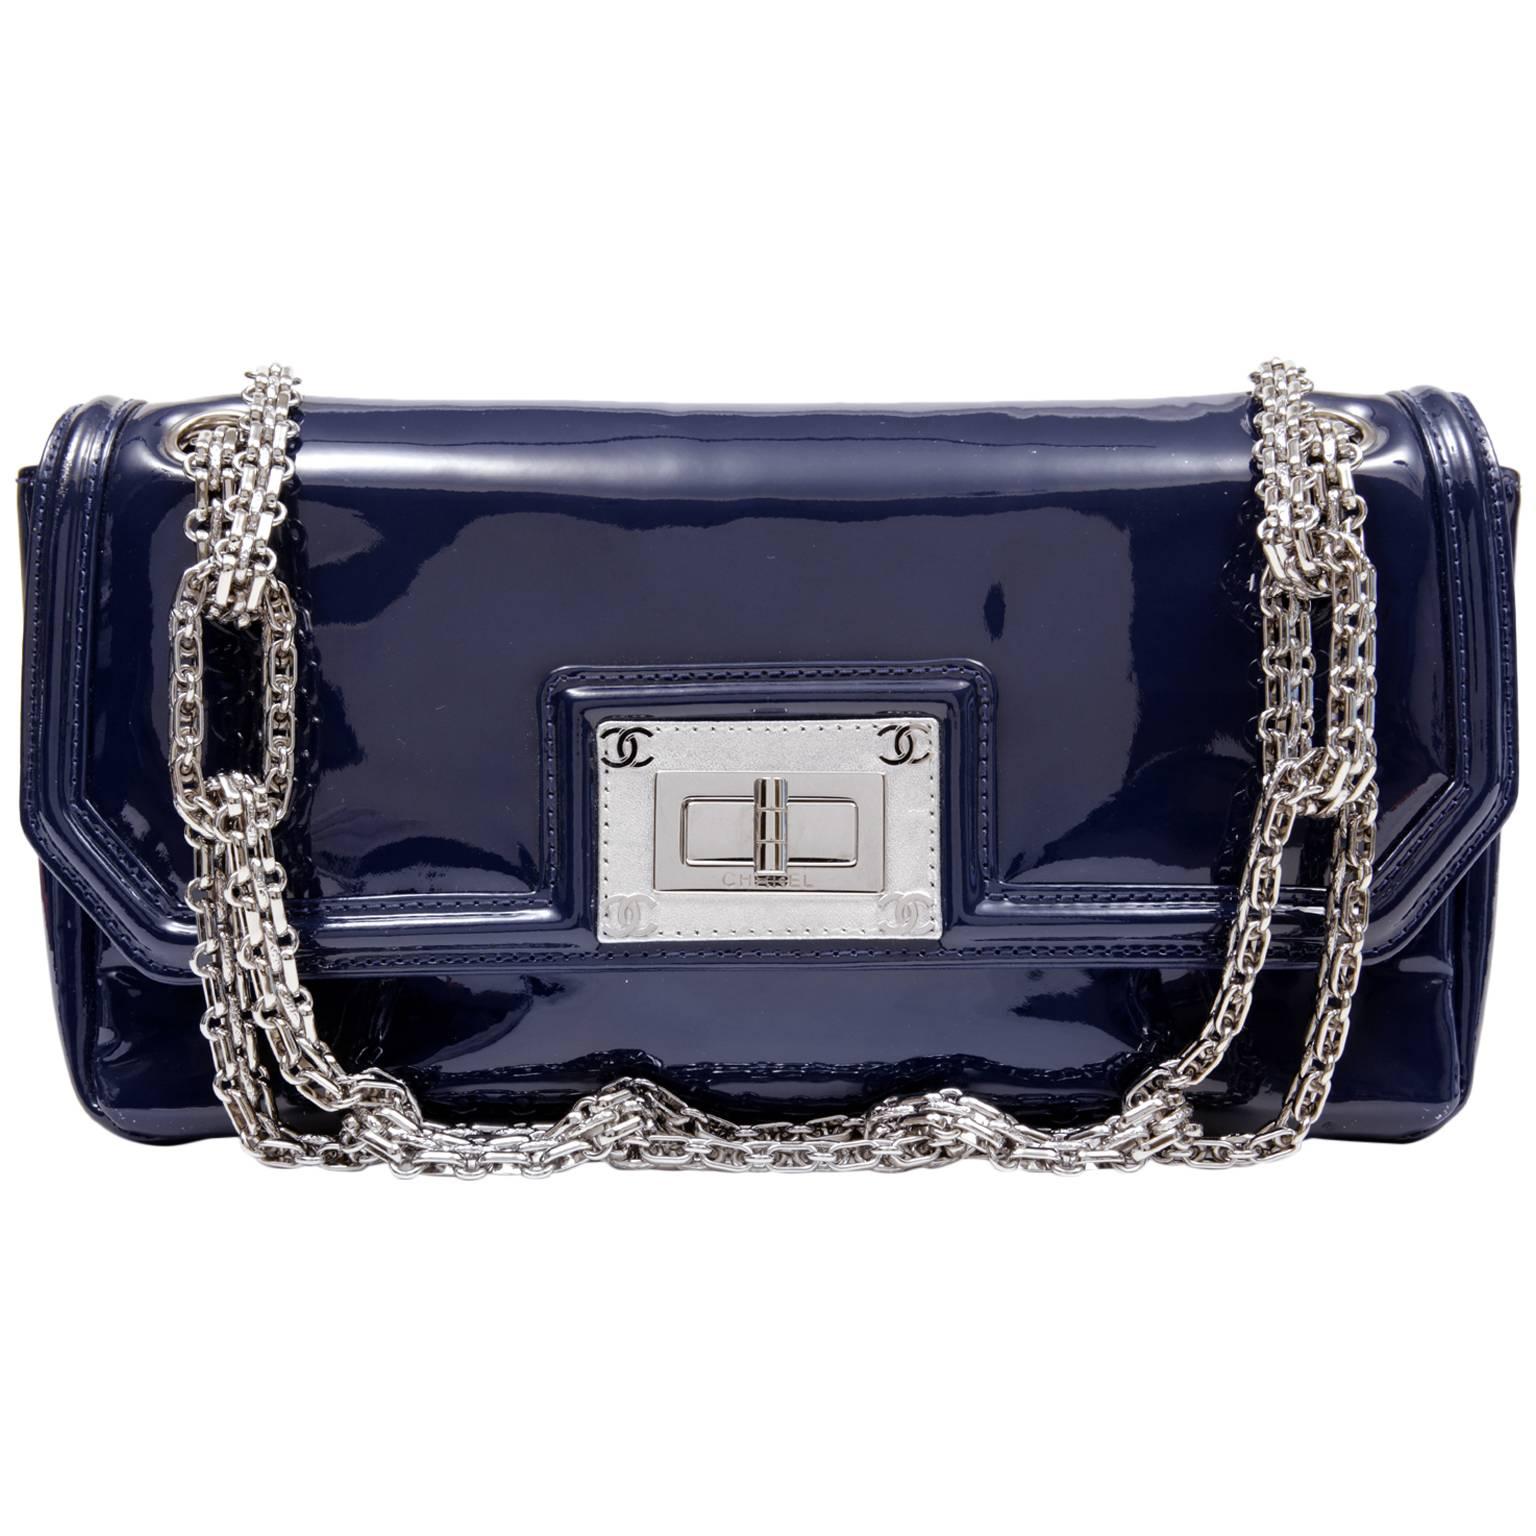 Chanel Navy Blue Patent Leather Reissue Flap Bag- Medium